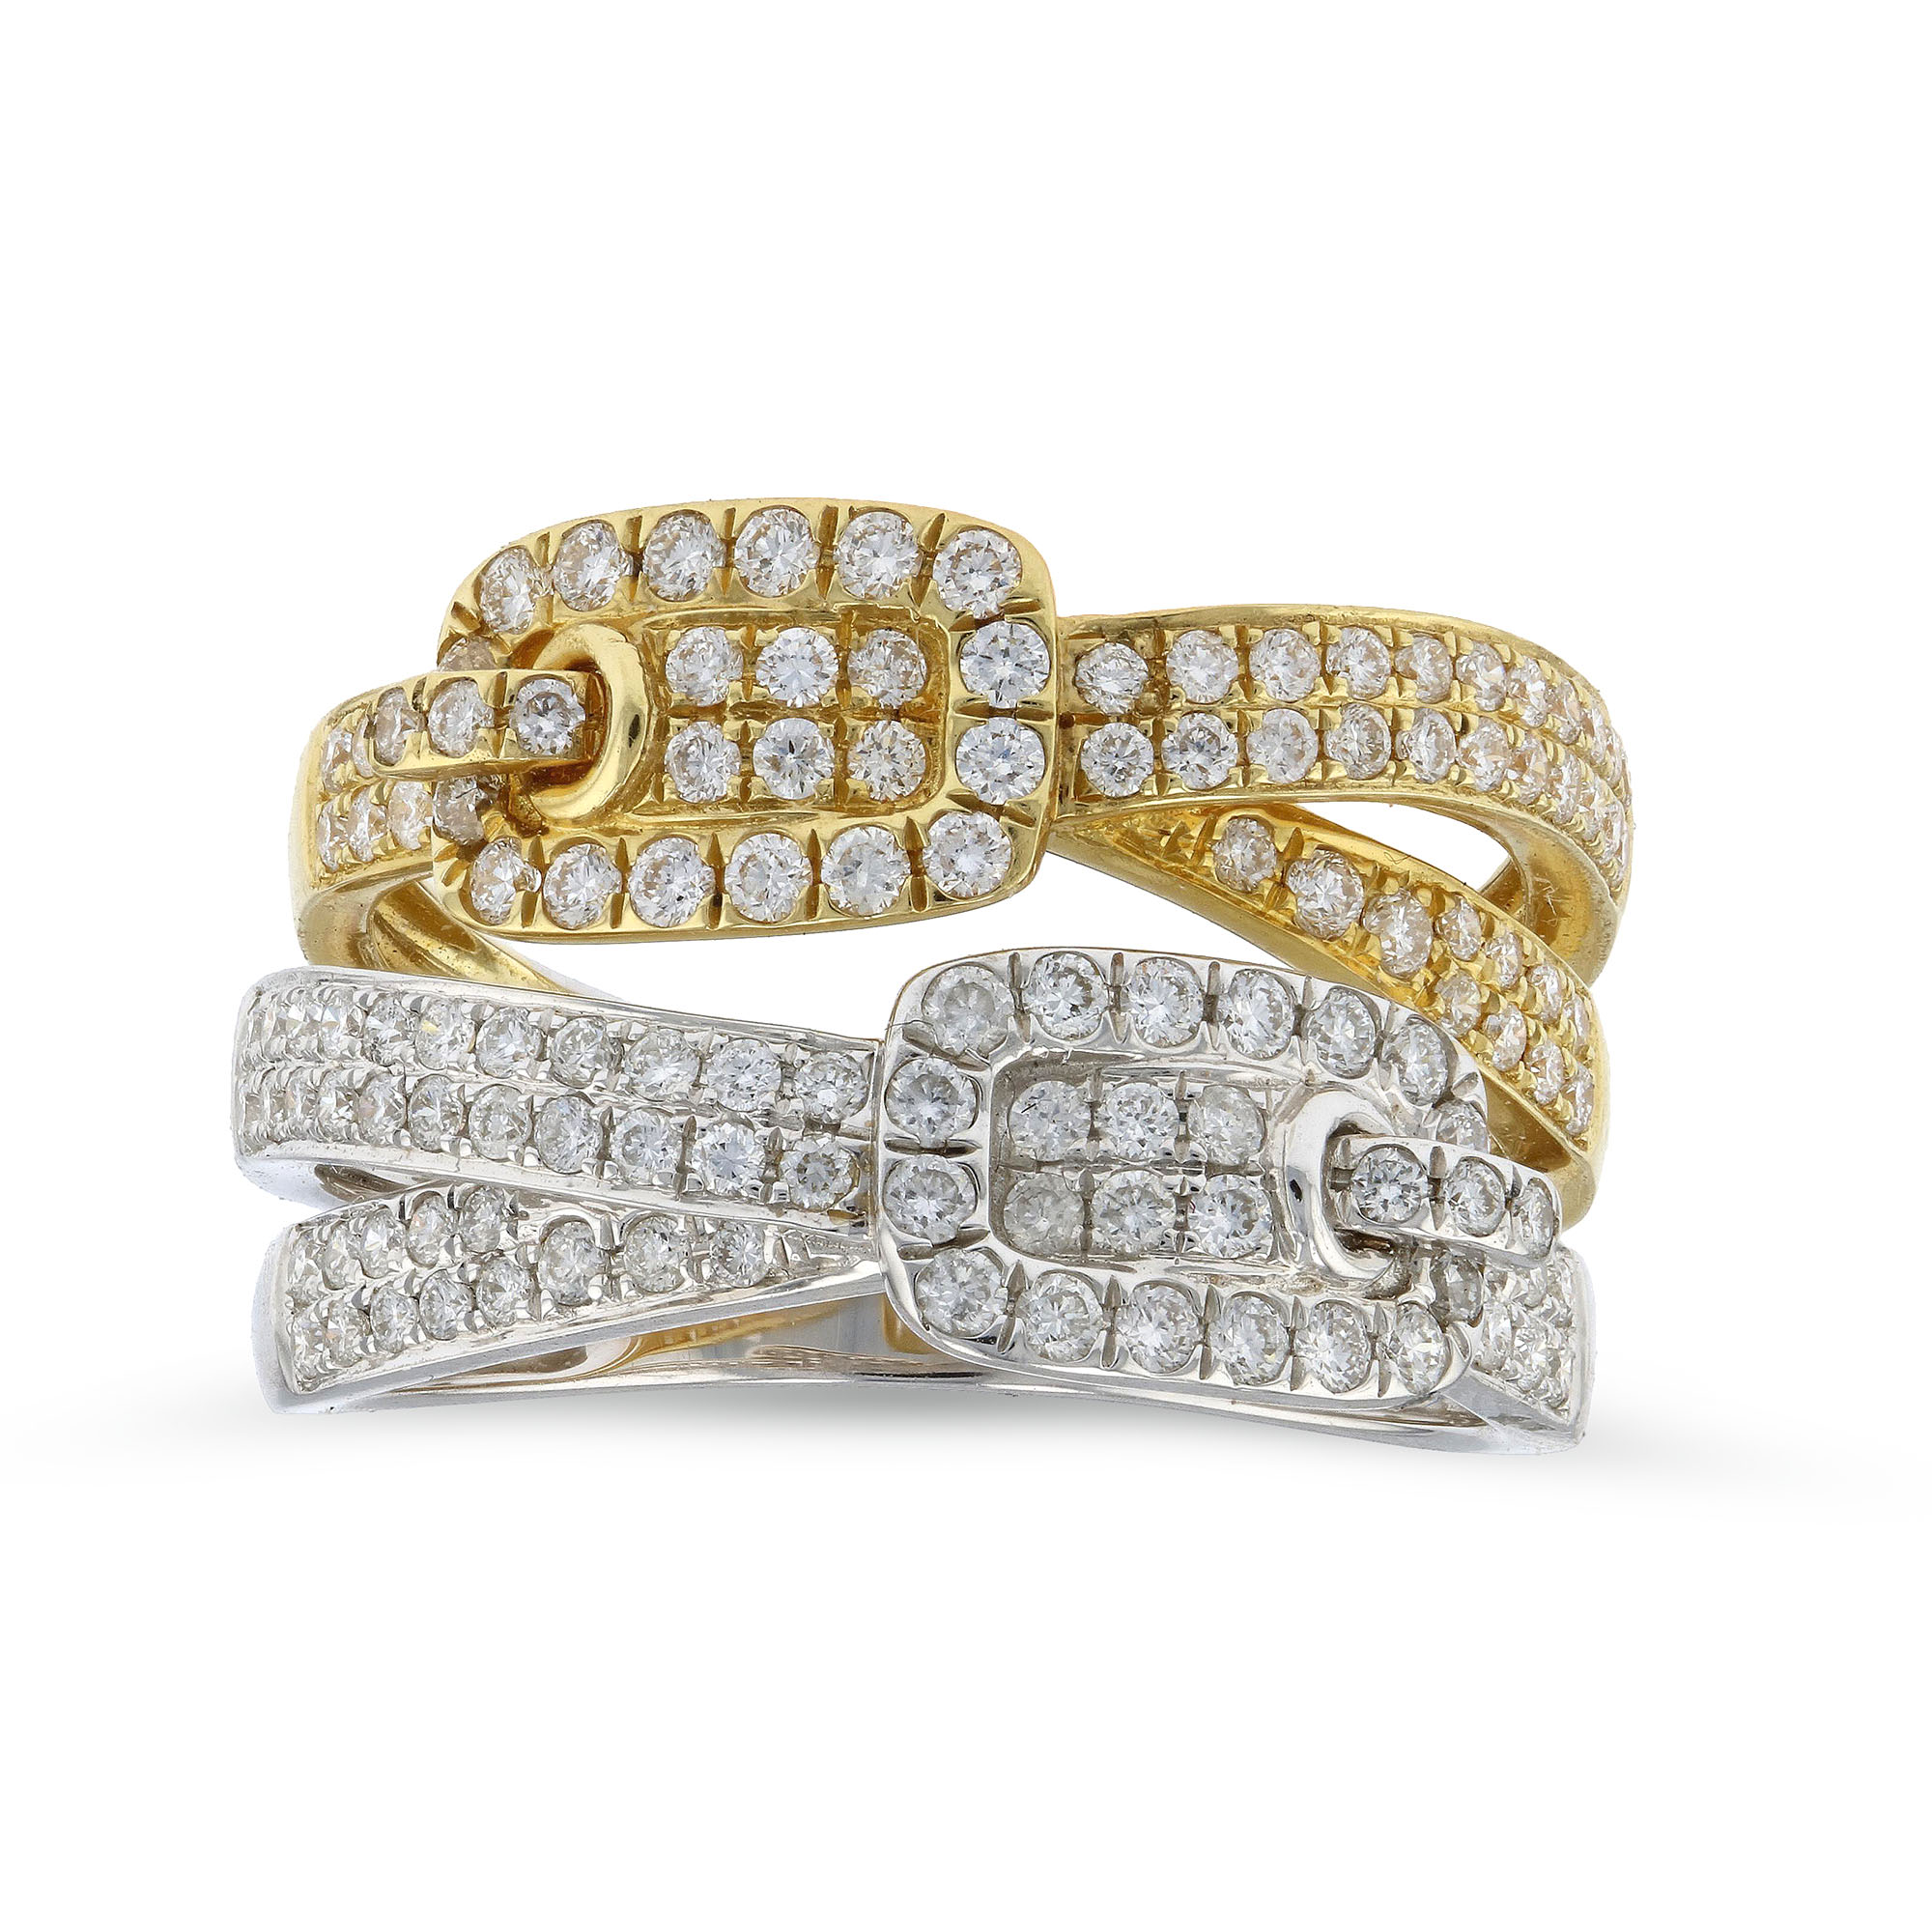 View 0.93ctw Diamond Fashion Ring in 18k Gold